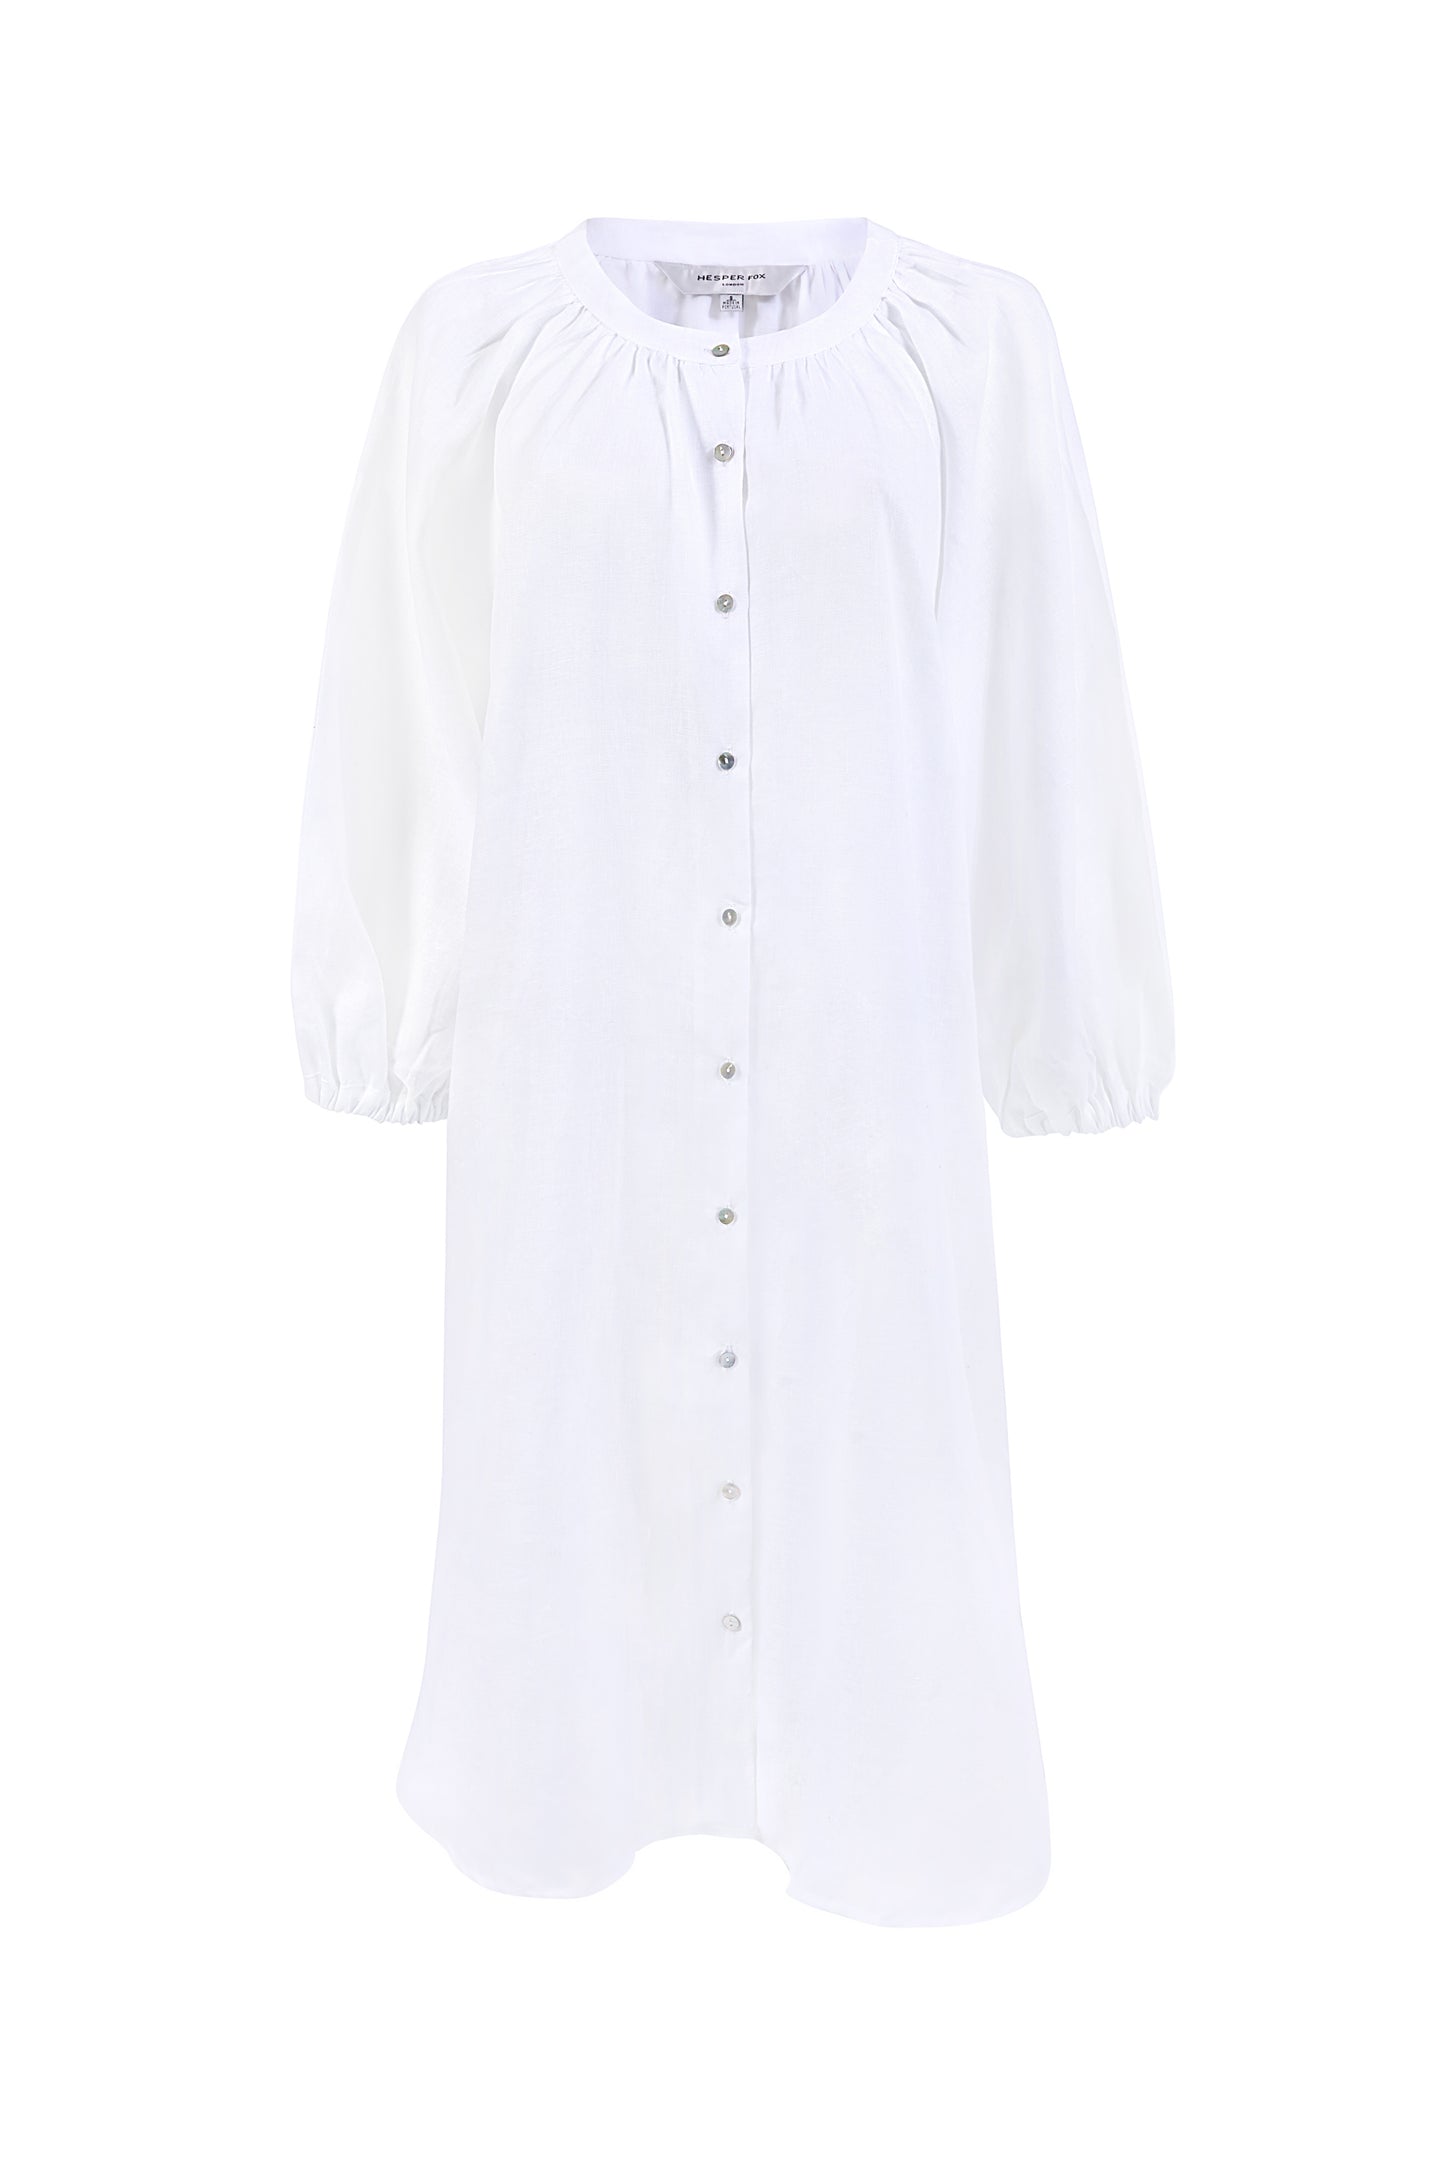 Ophelia White Linen Shirt Dress